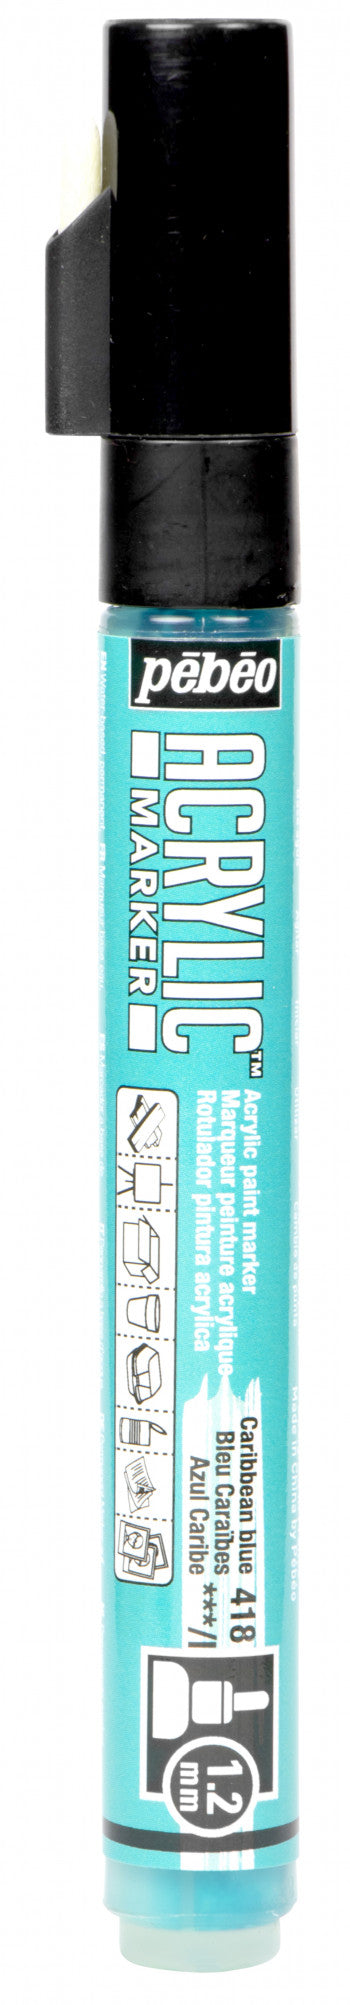 Acrylic Marker 1.2mm Pebeo Caribbean Blue